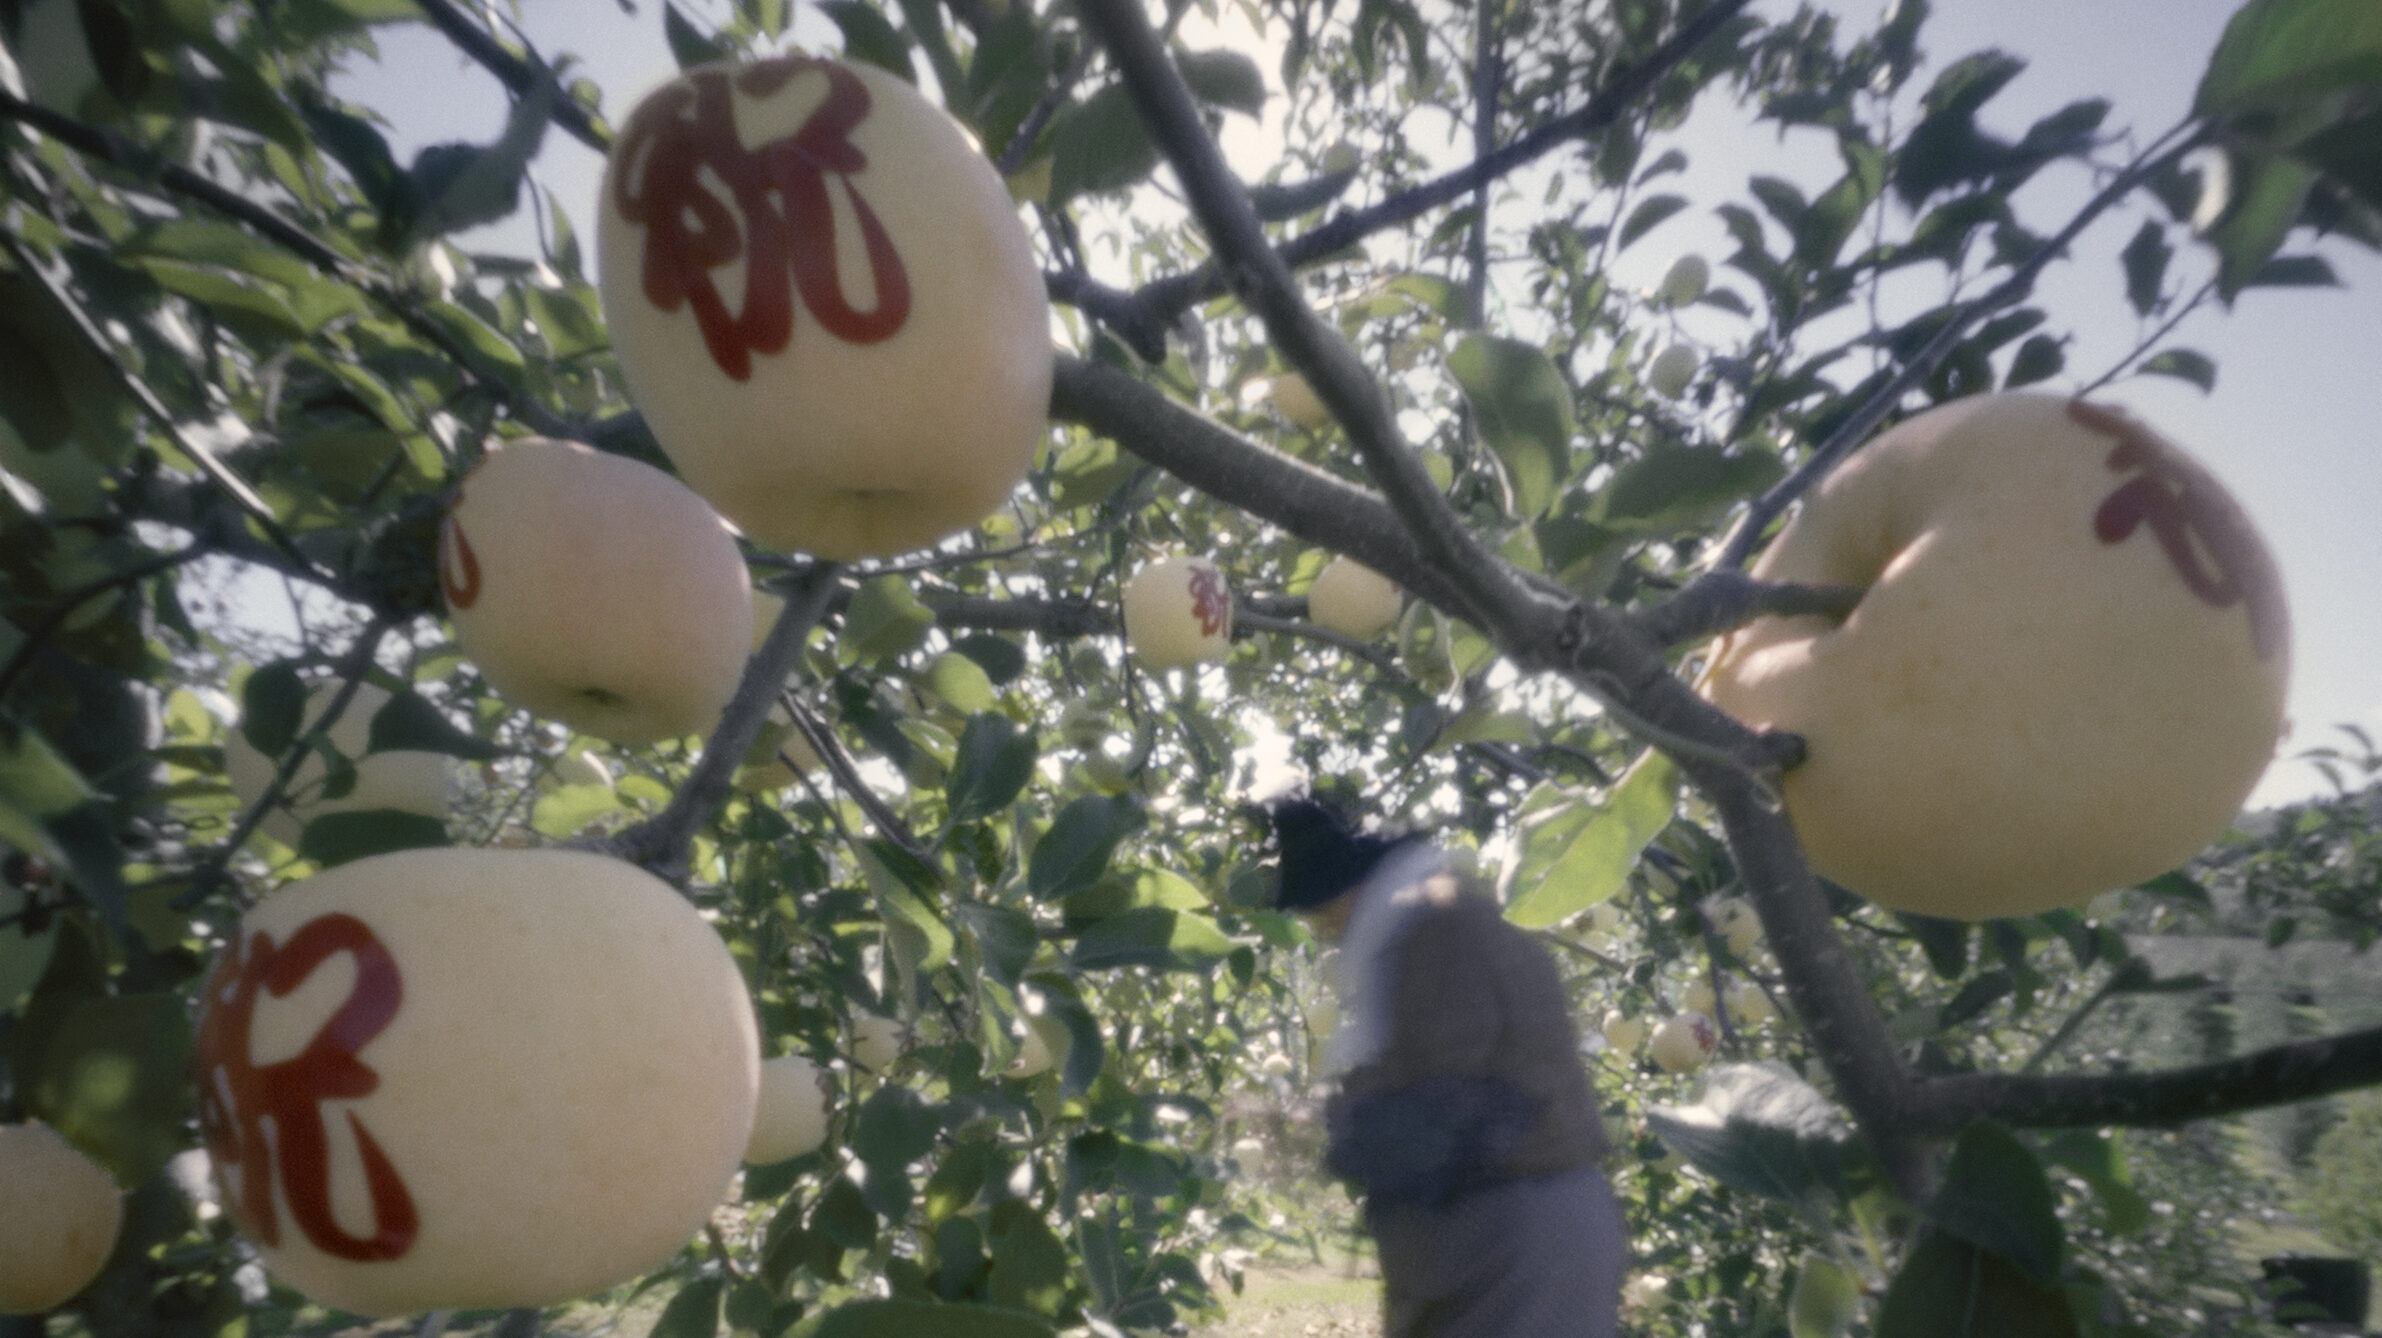 Emoji Apples The Highly Prized Yet Transient Japanese Fruit Art